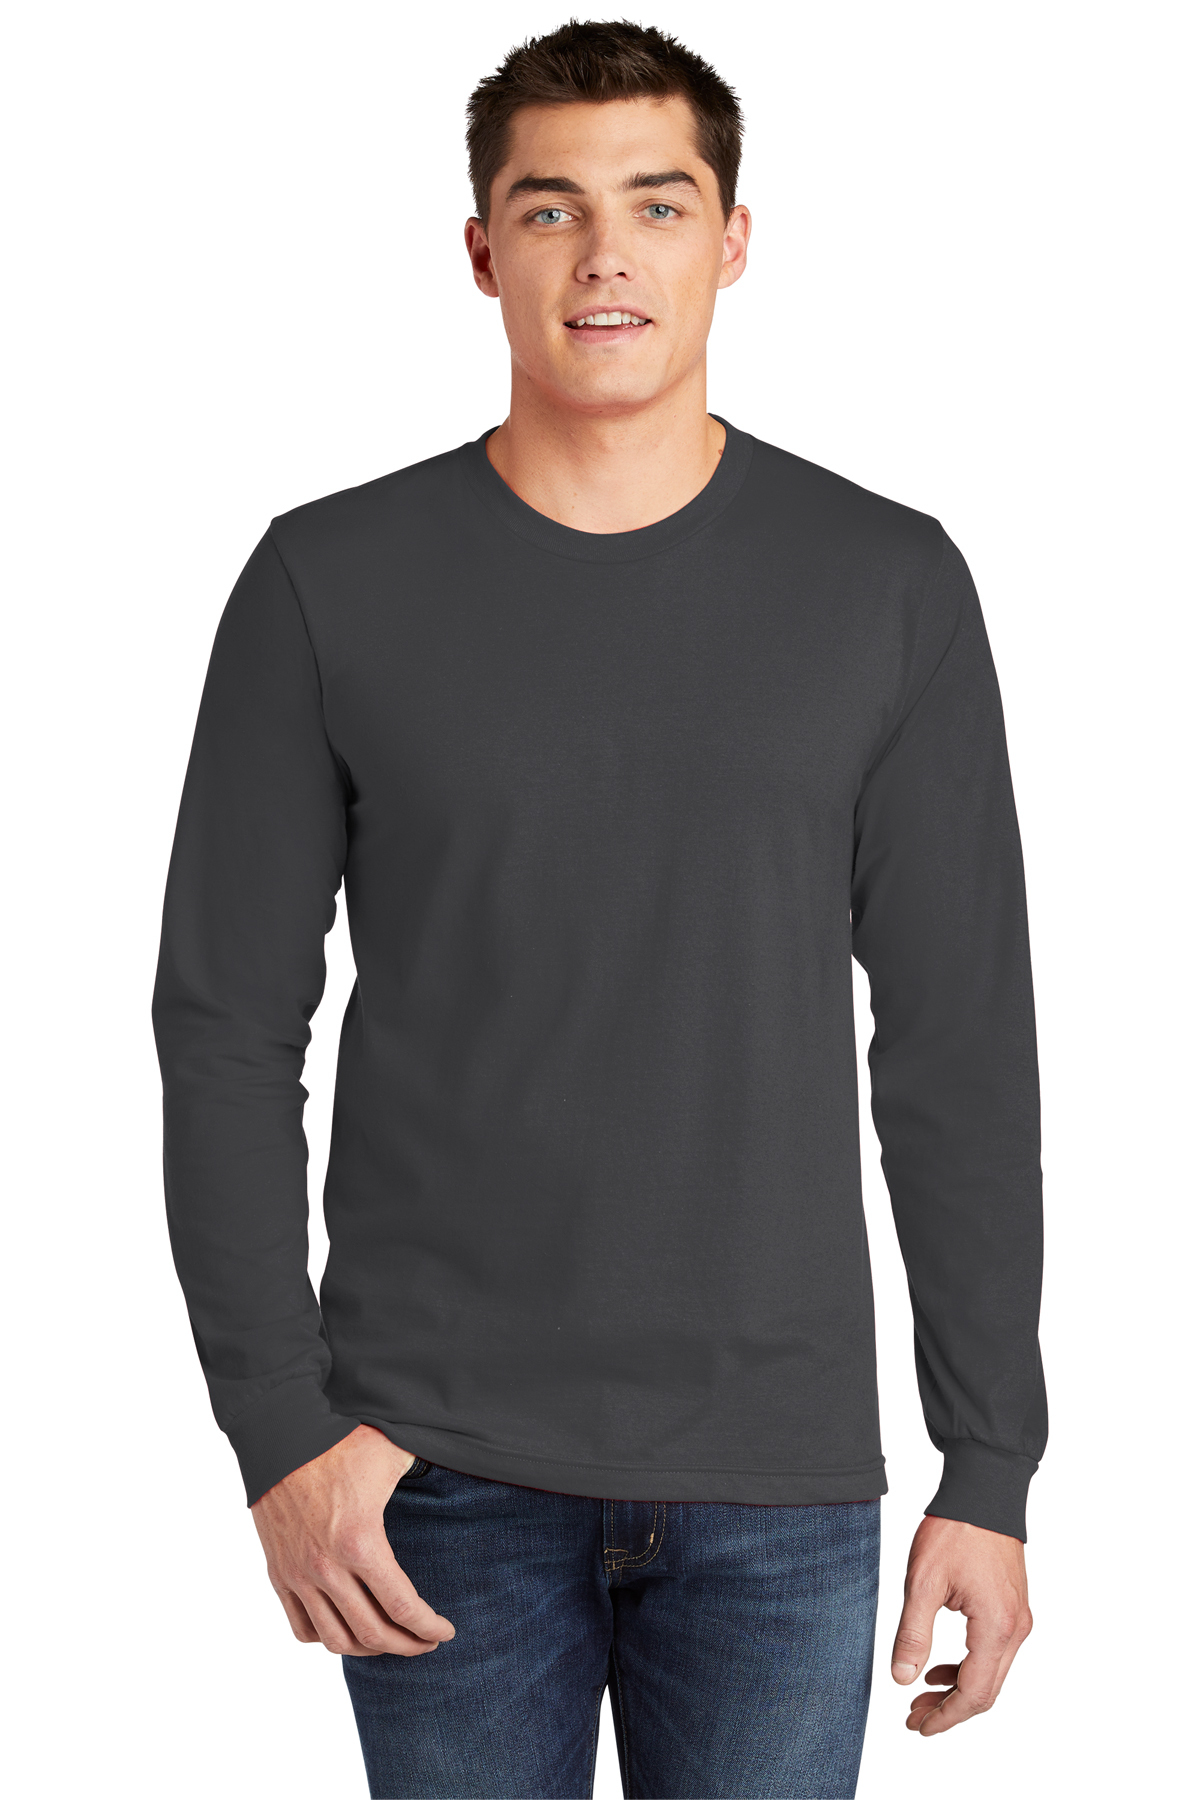 American Apparel Fine Jersey Unisex Long Sleeve T-Shirt | Product | SanMar